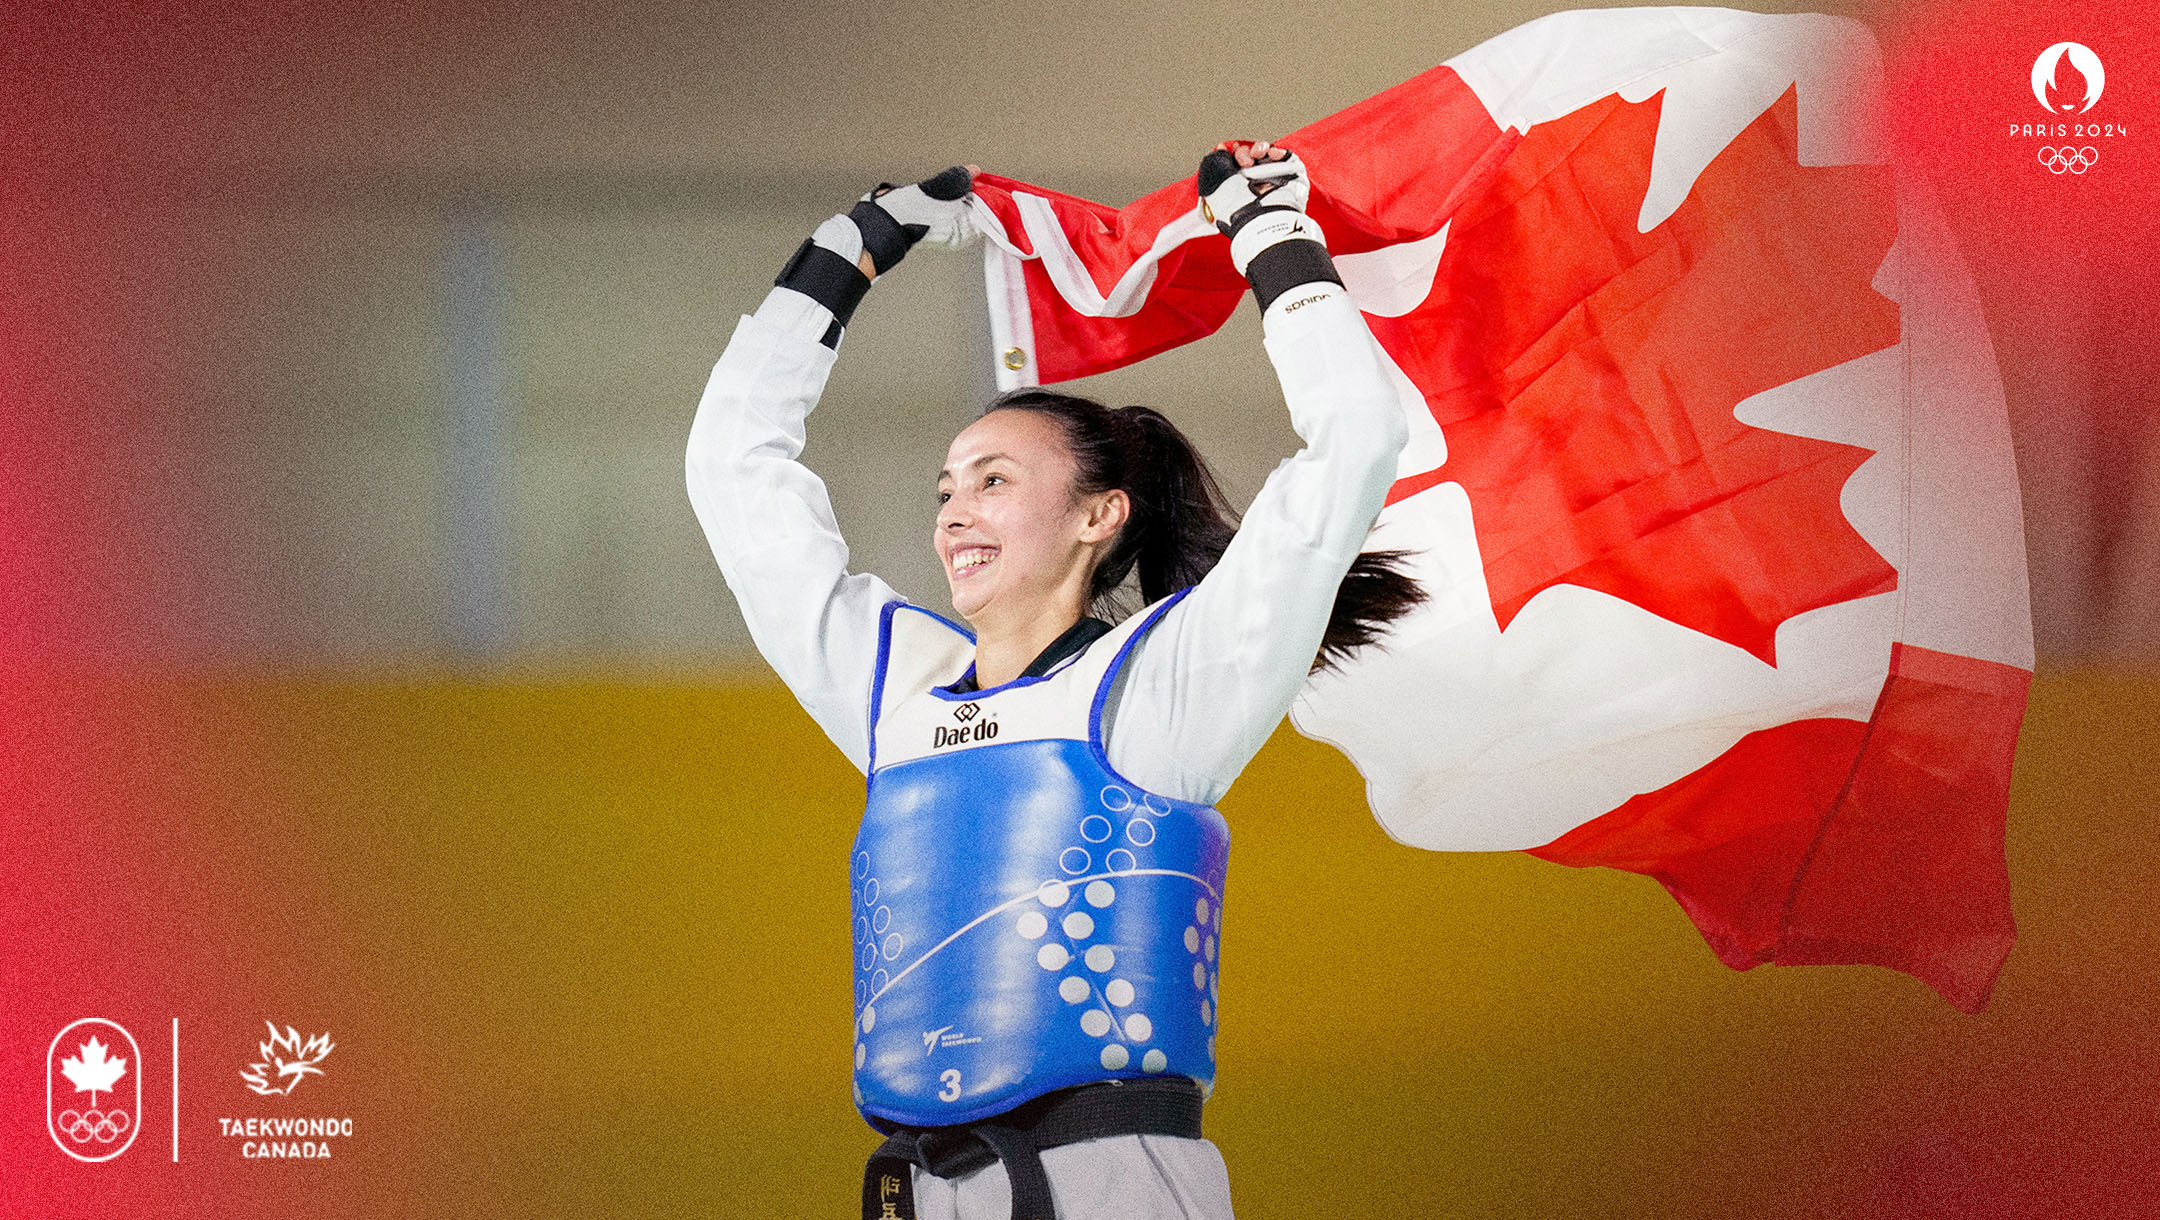 Top Team Taekwondo Athletes Named to Canada's Paris 2024 Olympic Team – Team Canada